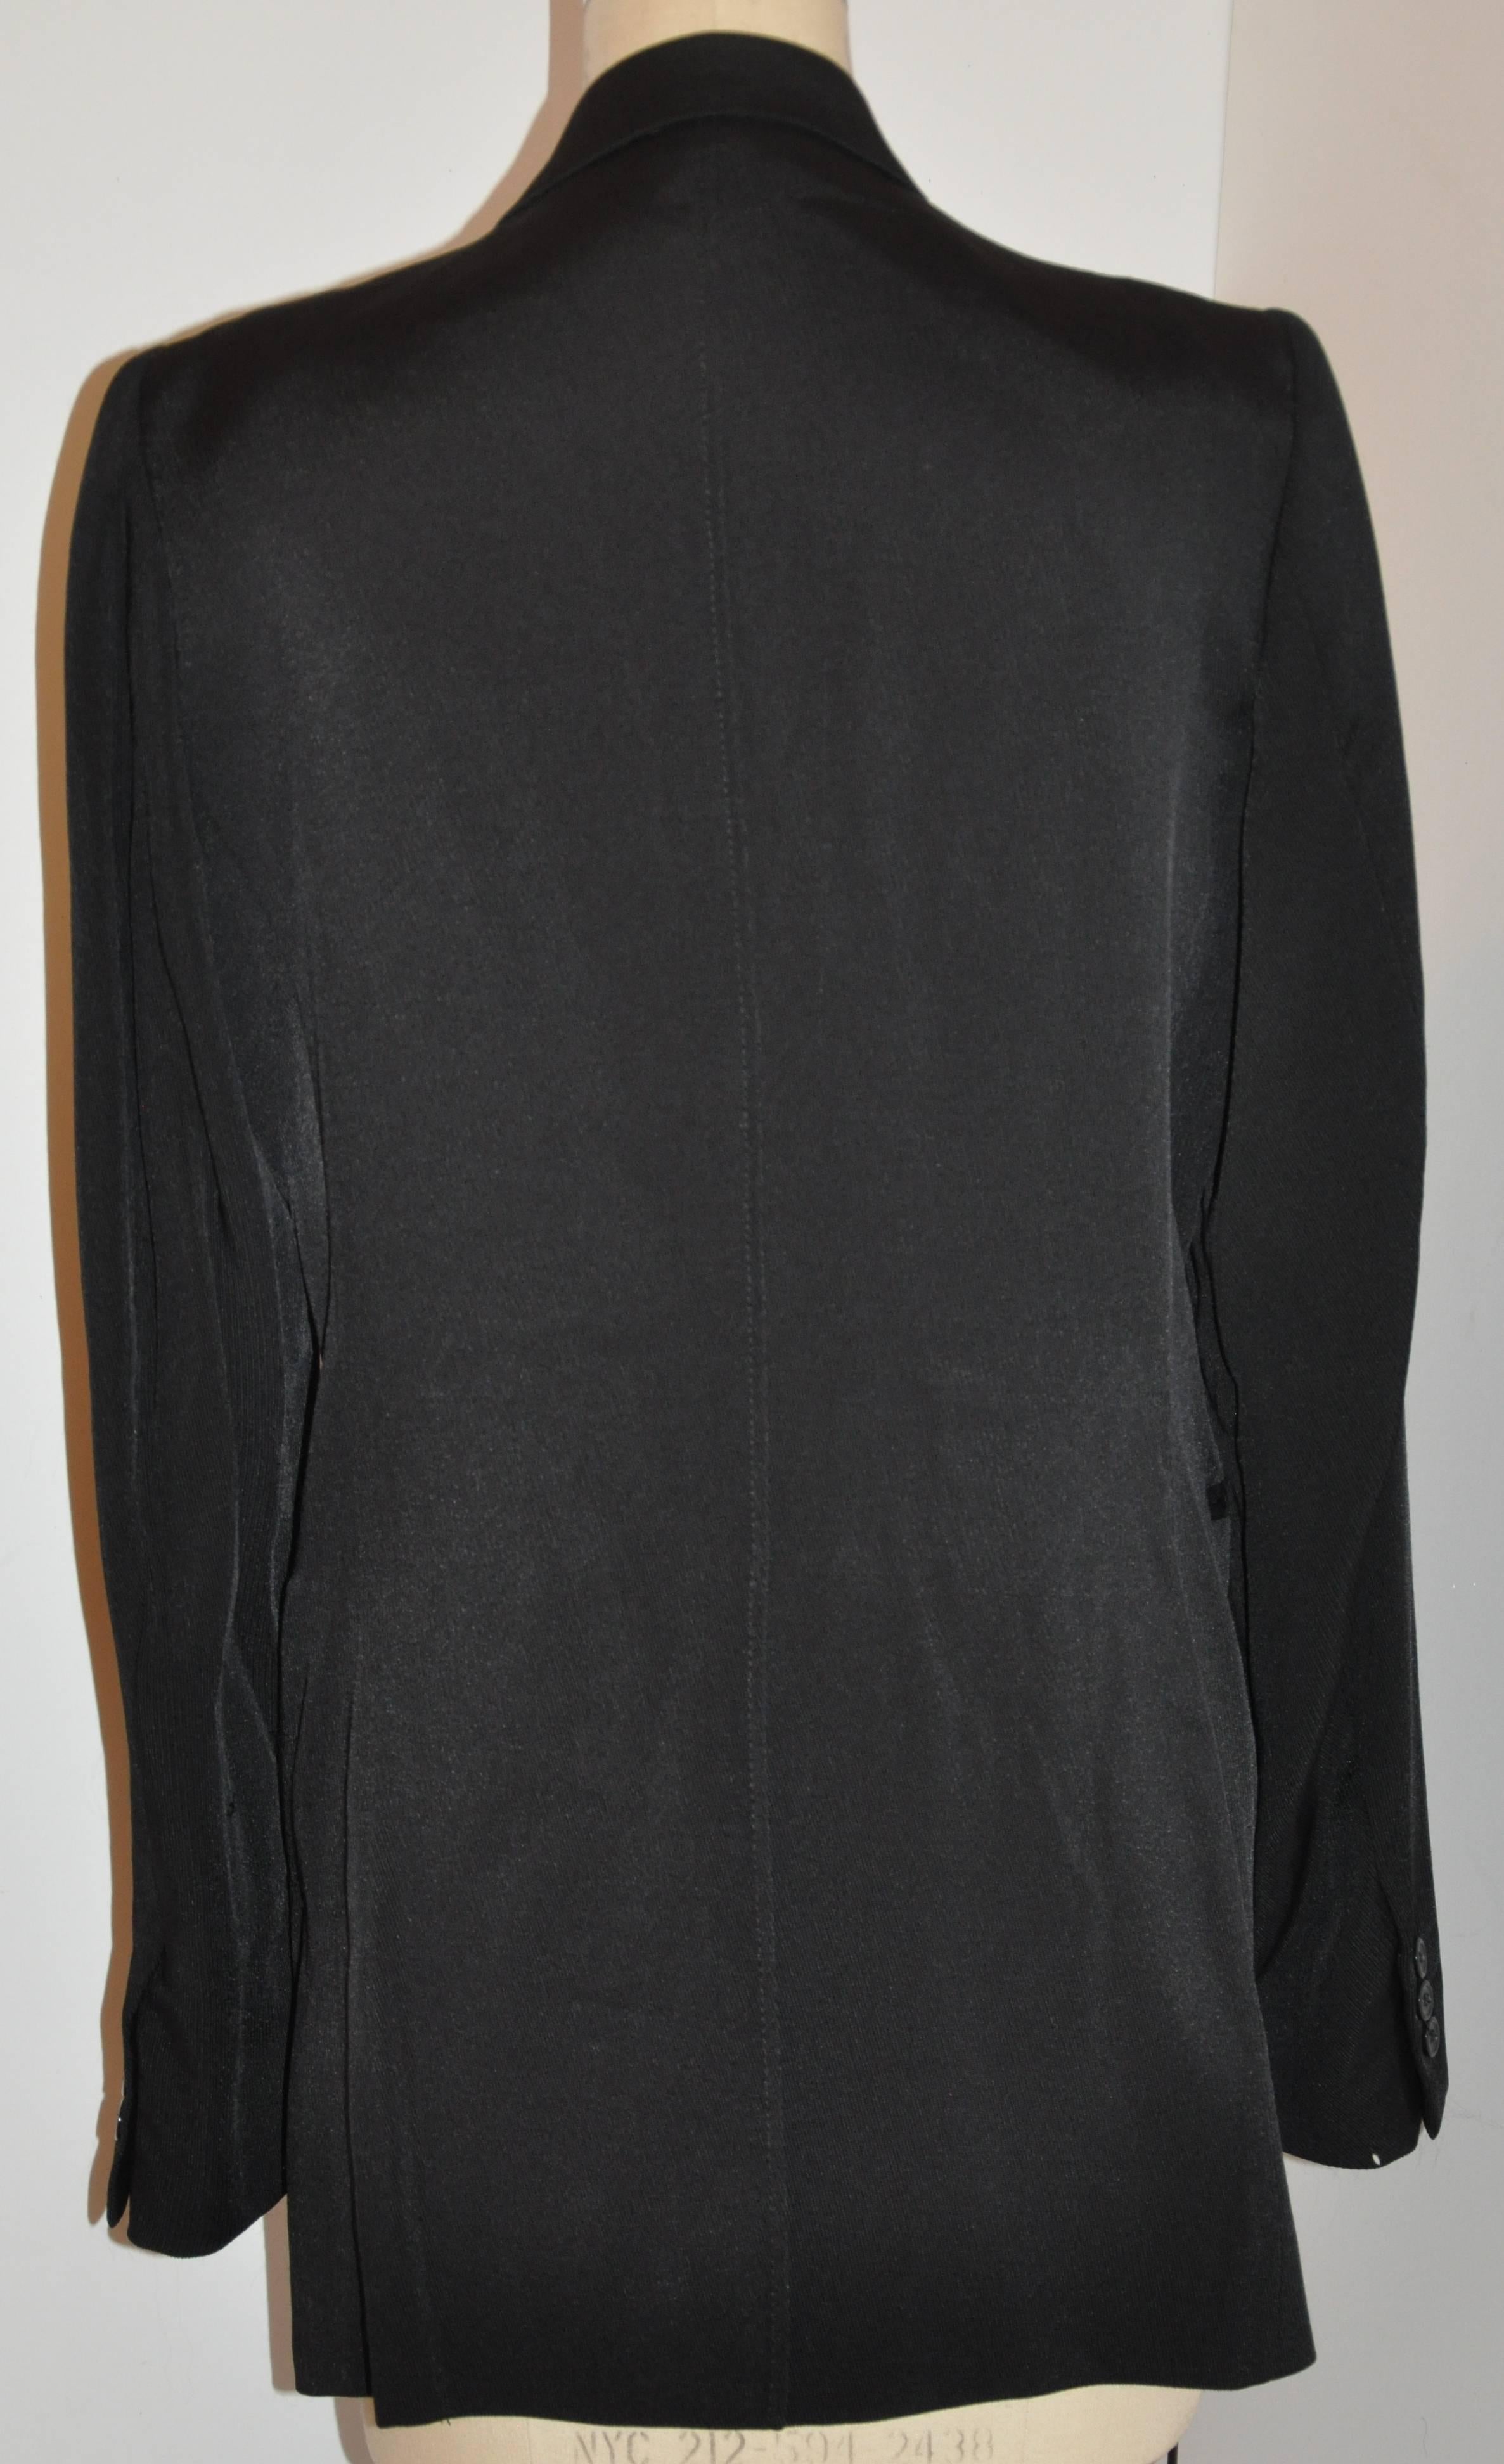           Yoshji Yamamoto men's black wool gabardine jacket from the 